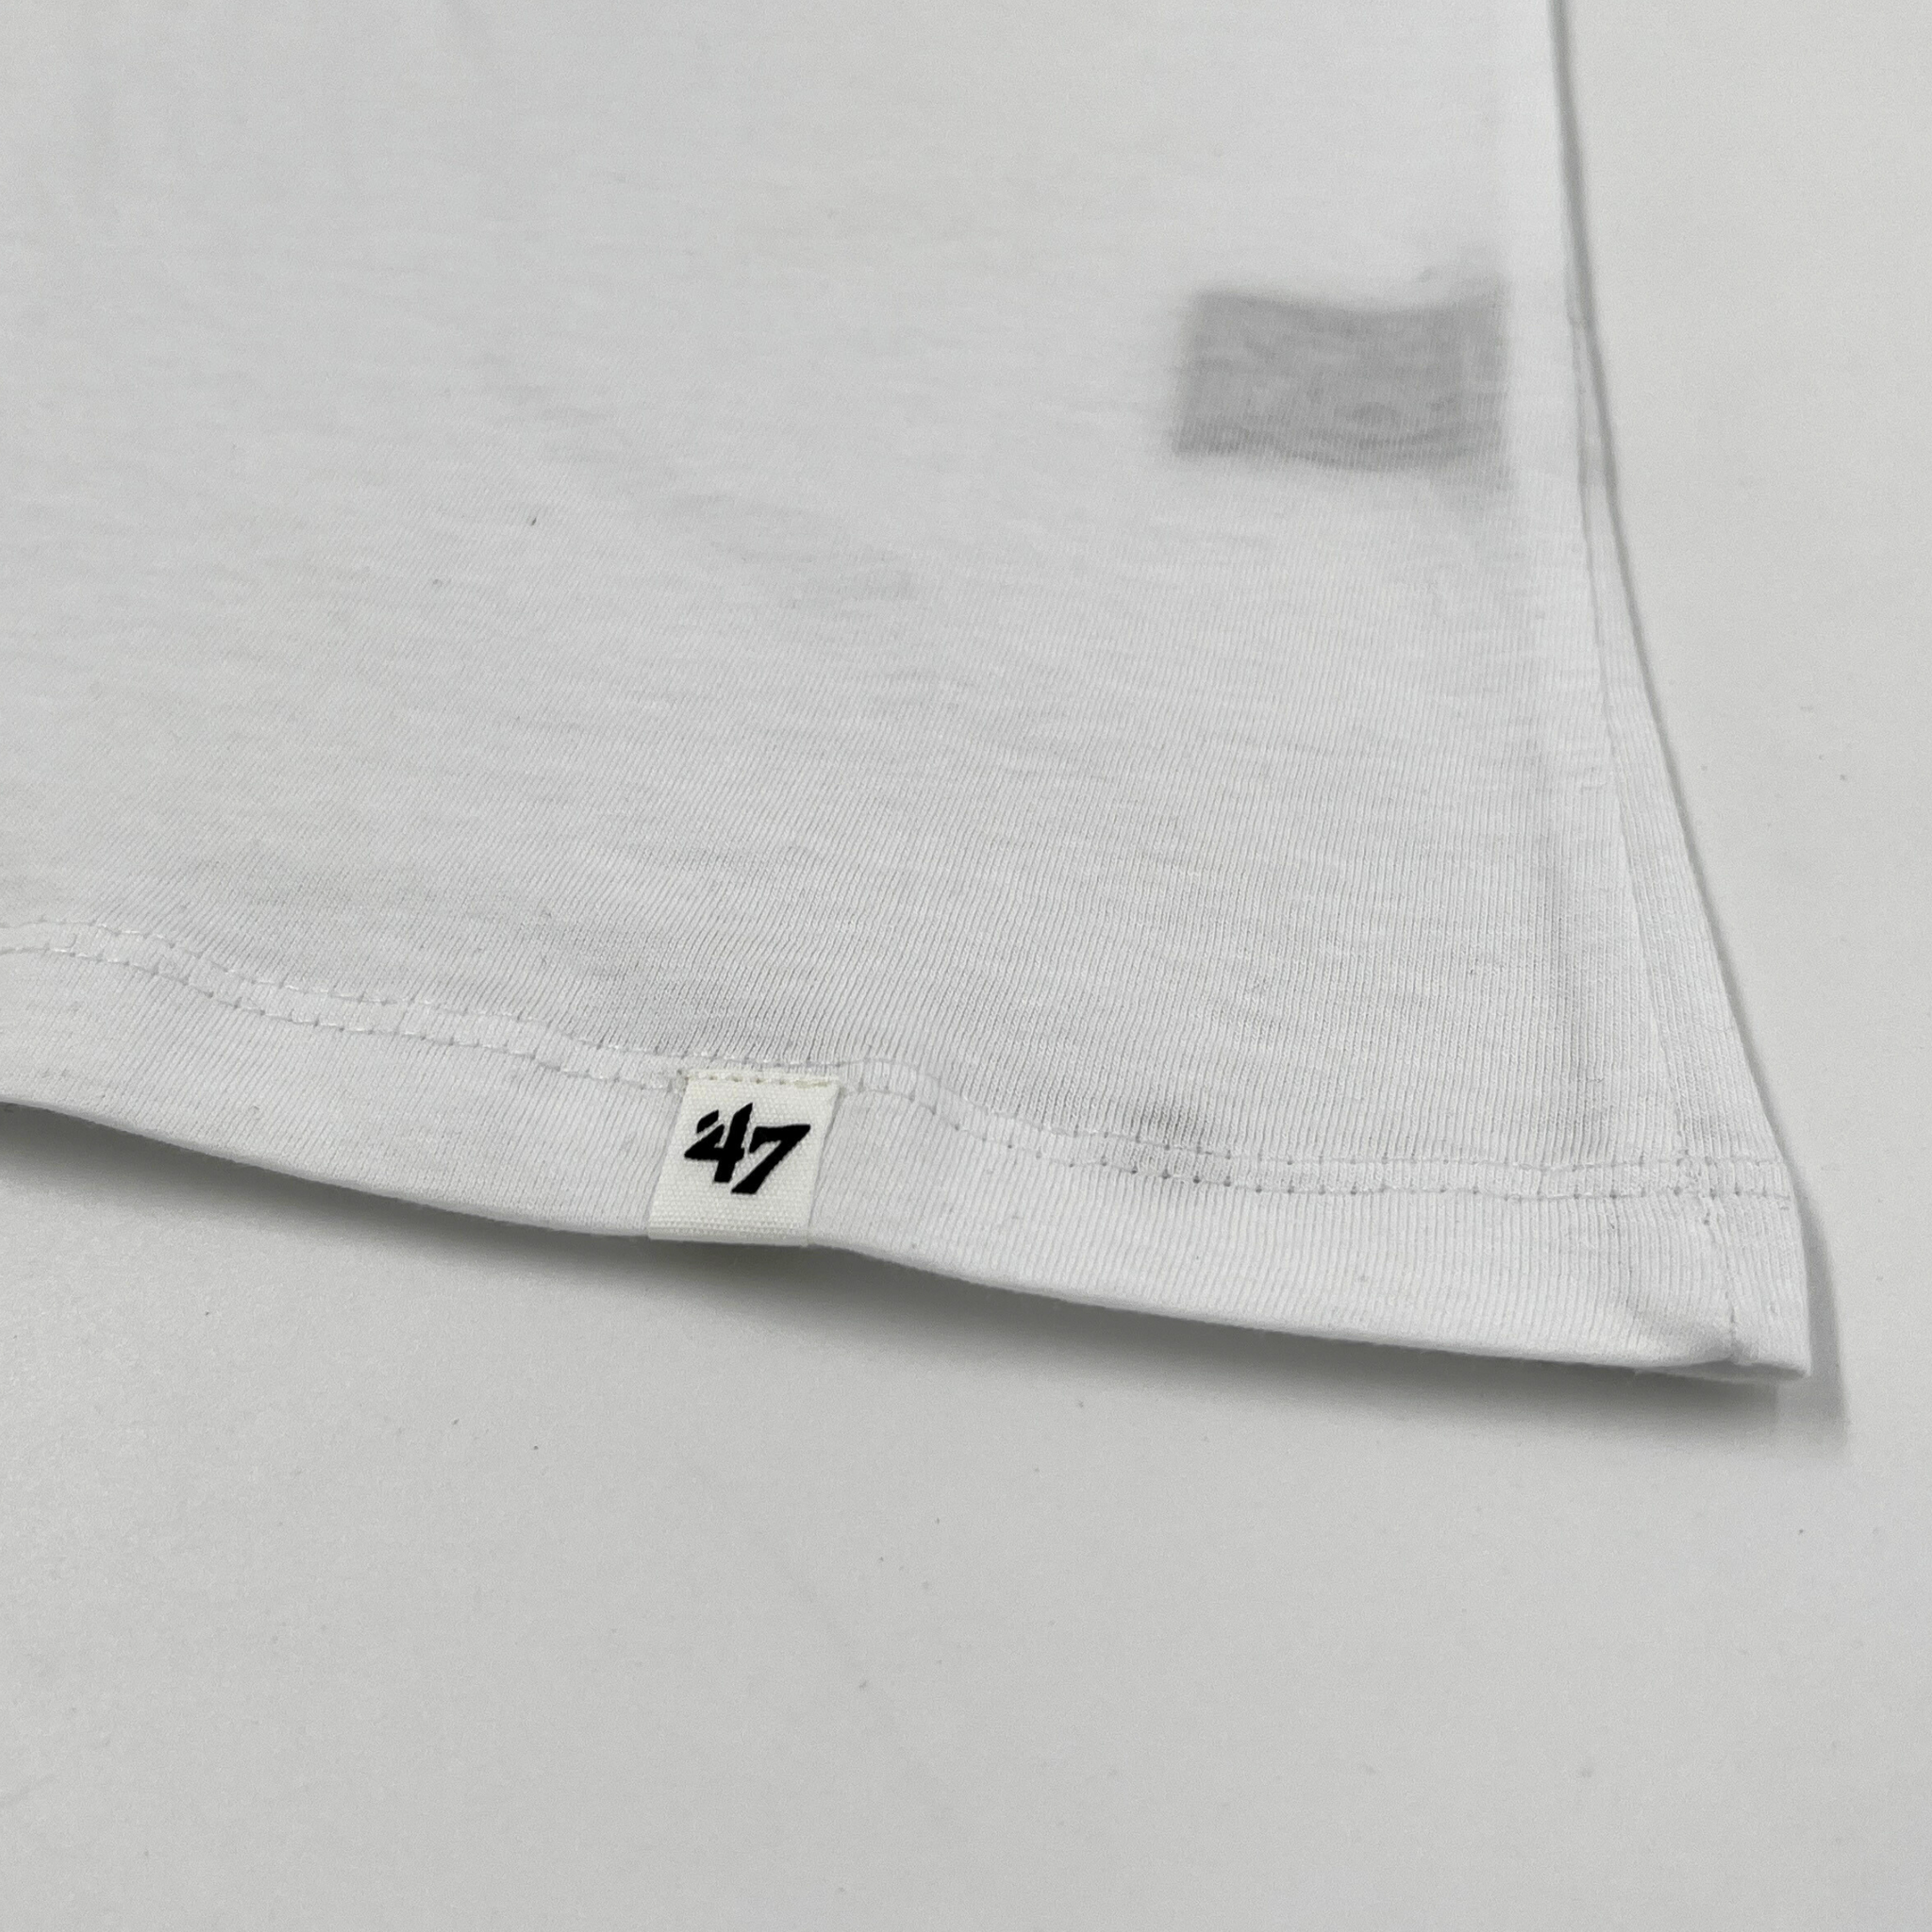 Women's '47 Brand Bills Whitewash With Charging Buffalo Logo Short Sleeve Shirt